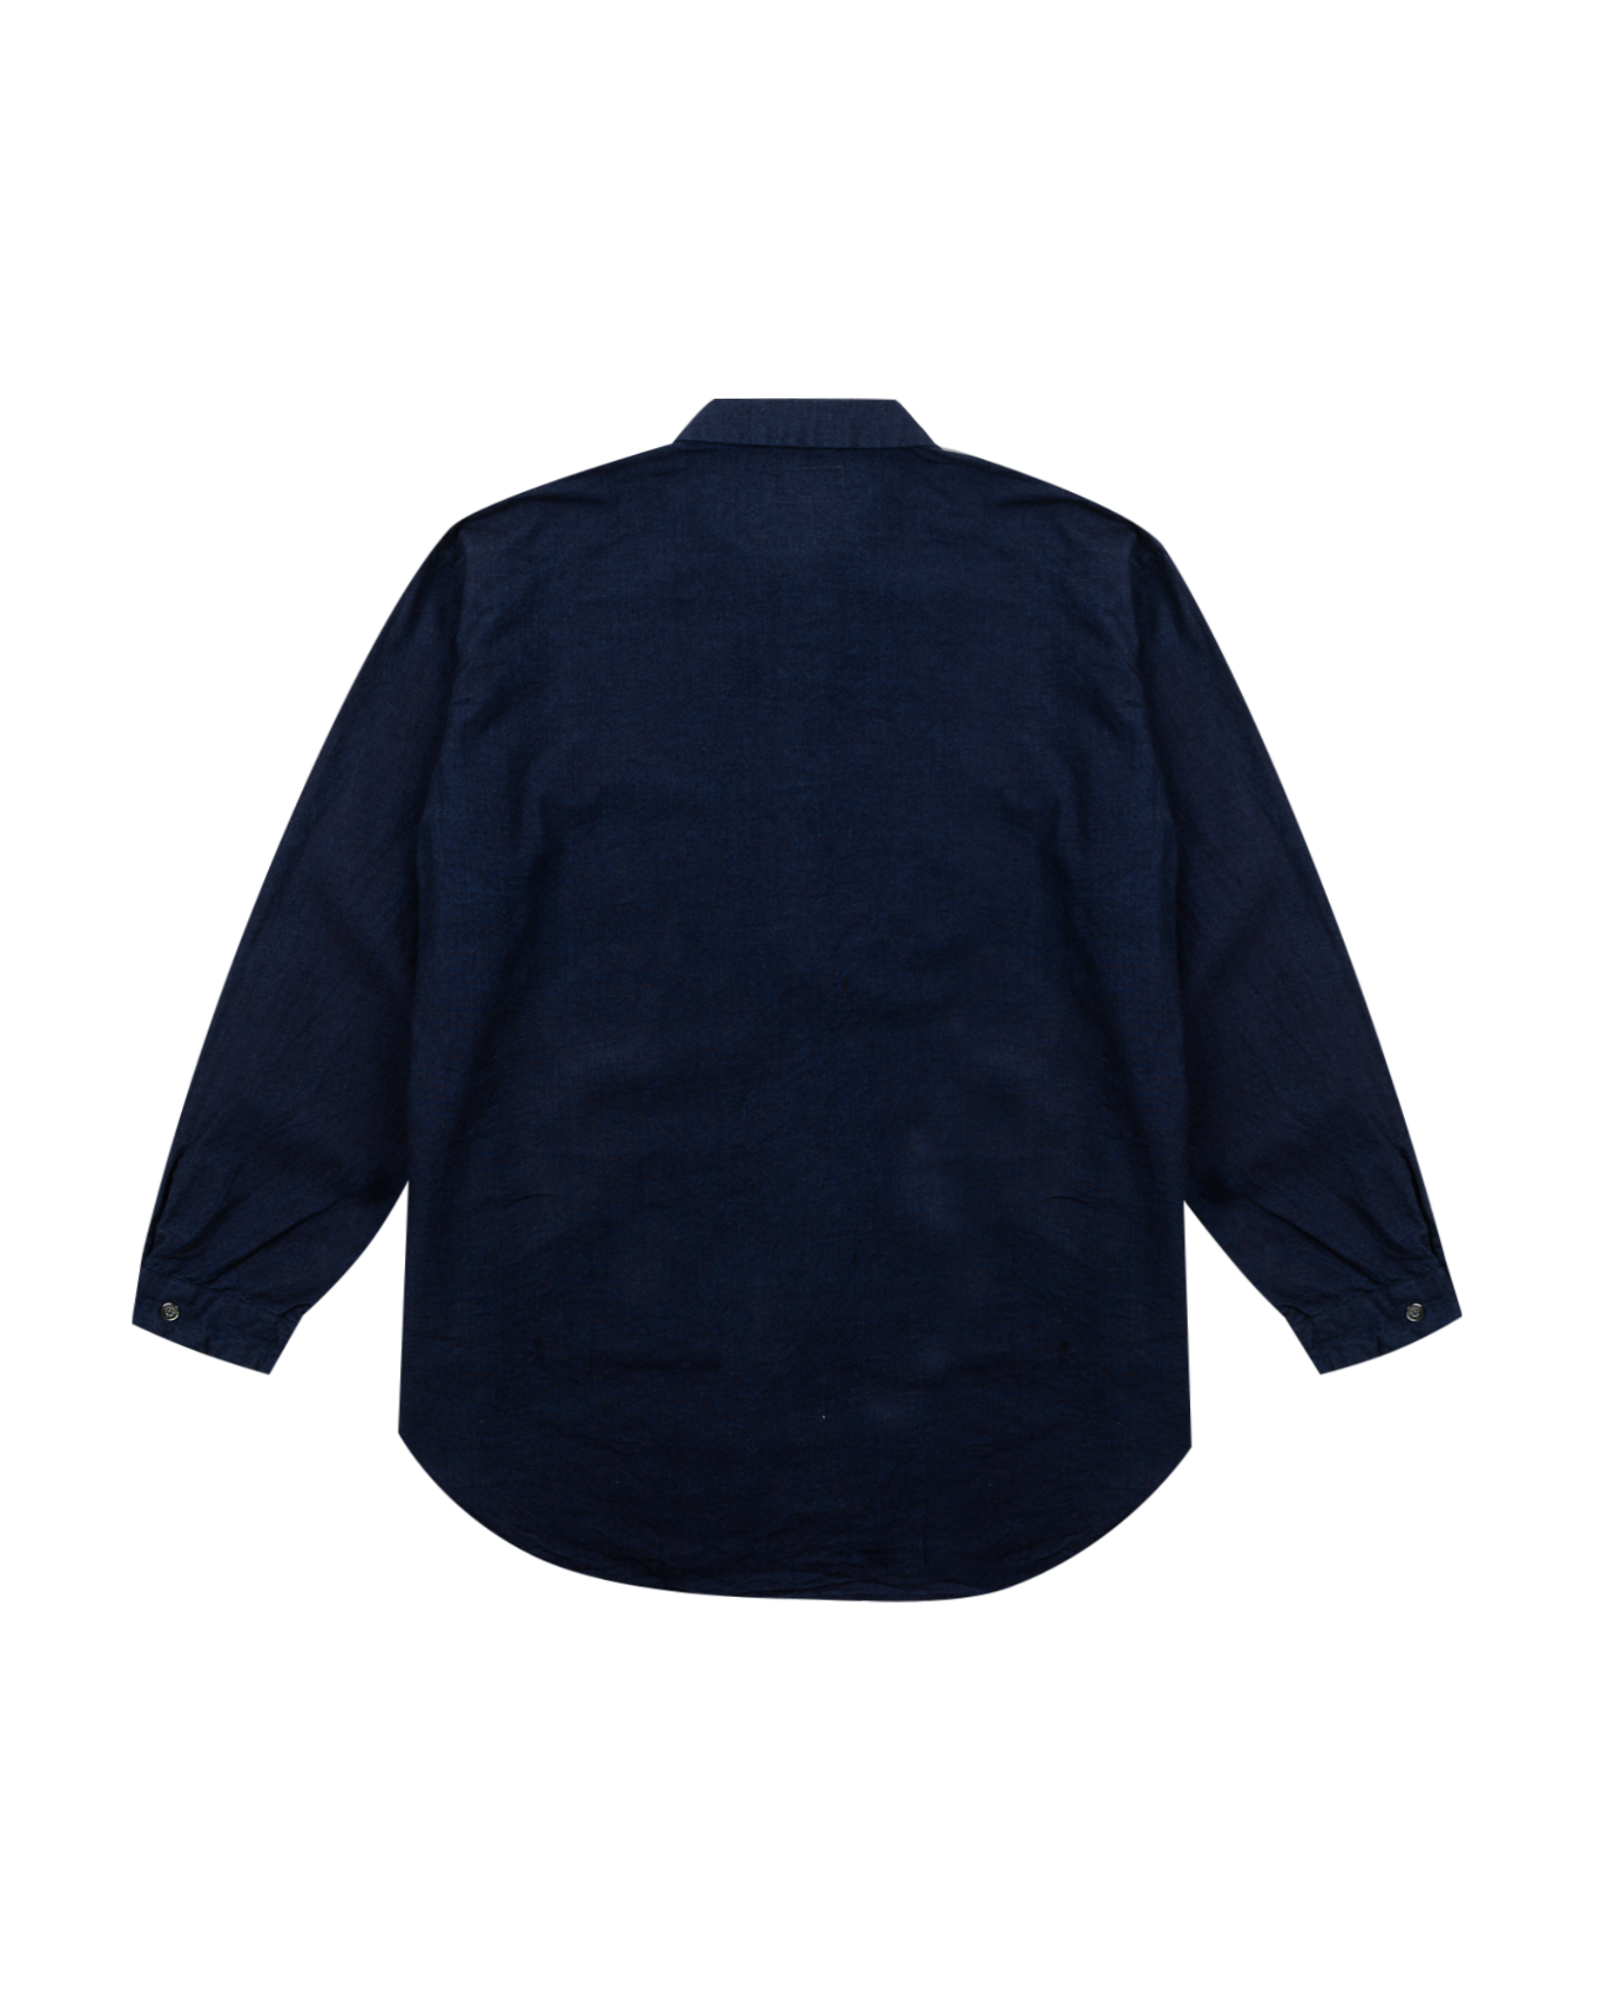 Pilgrim Surf + Supply - Shirt - McCarthy - Popover Shirt - Dark Navy